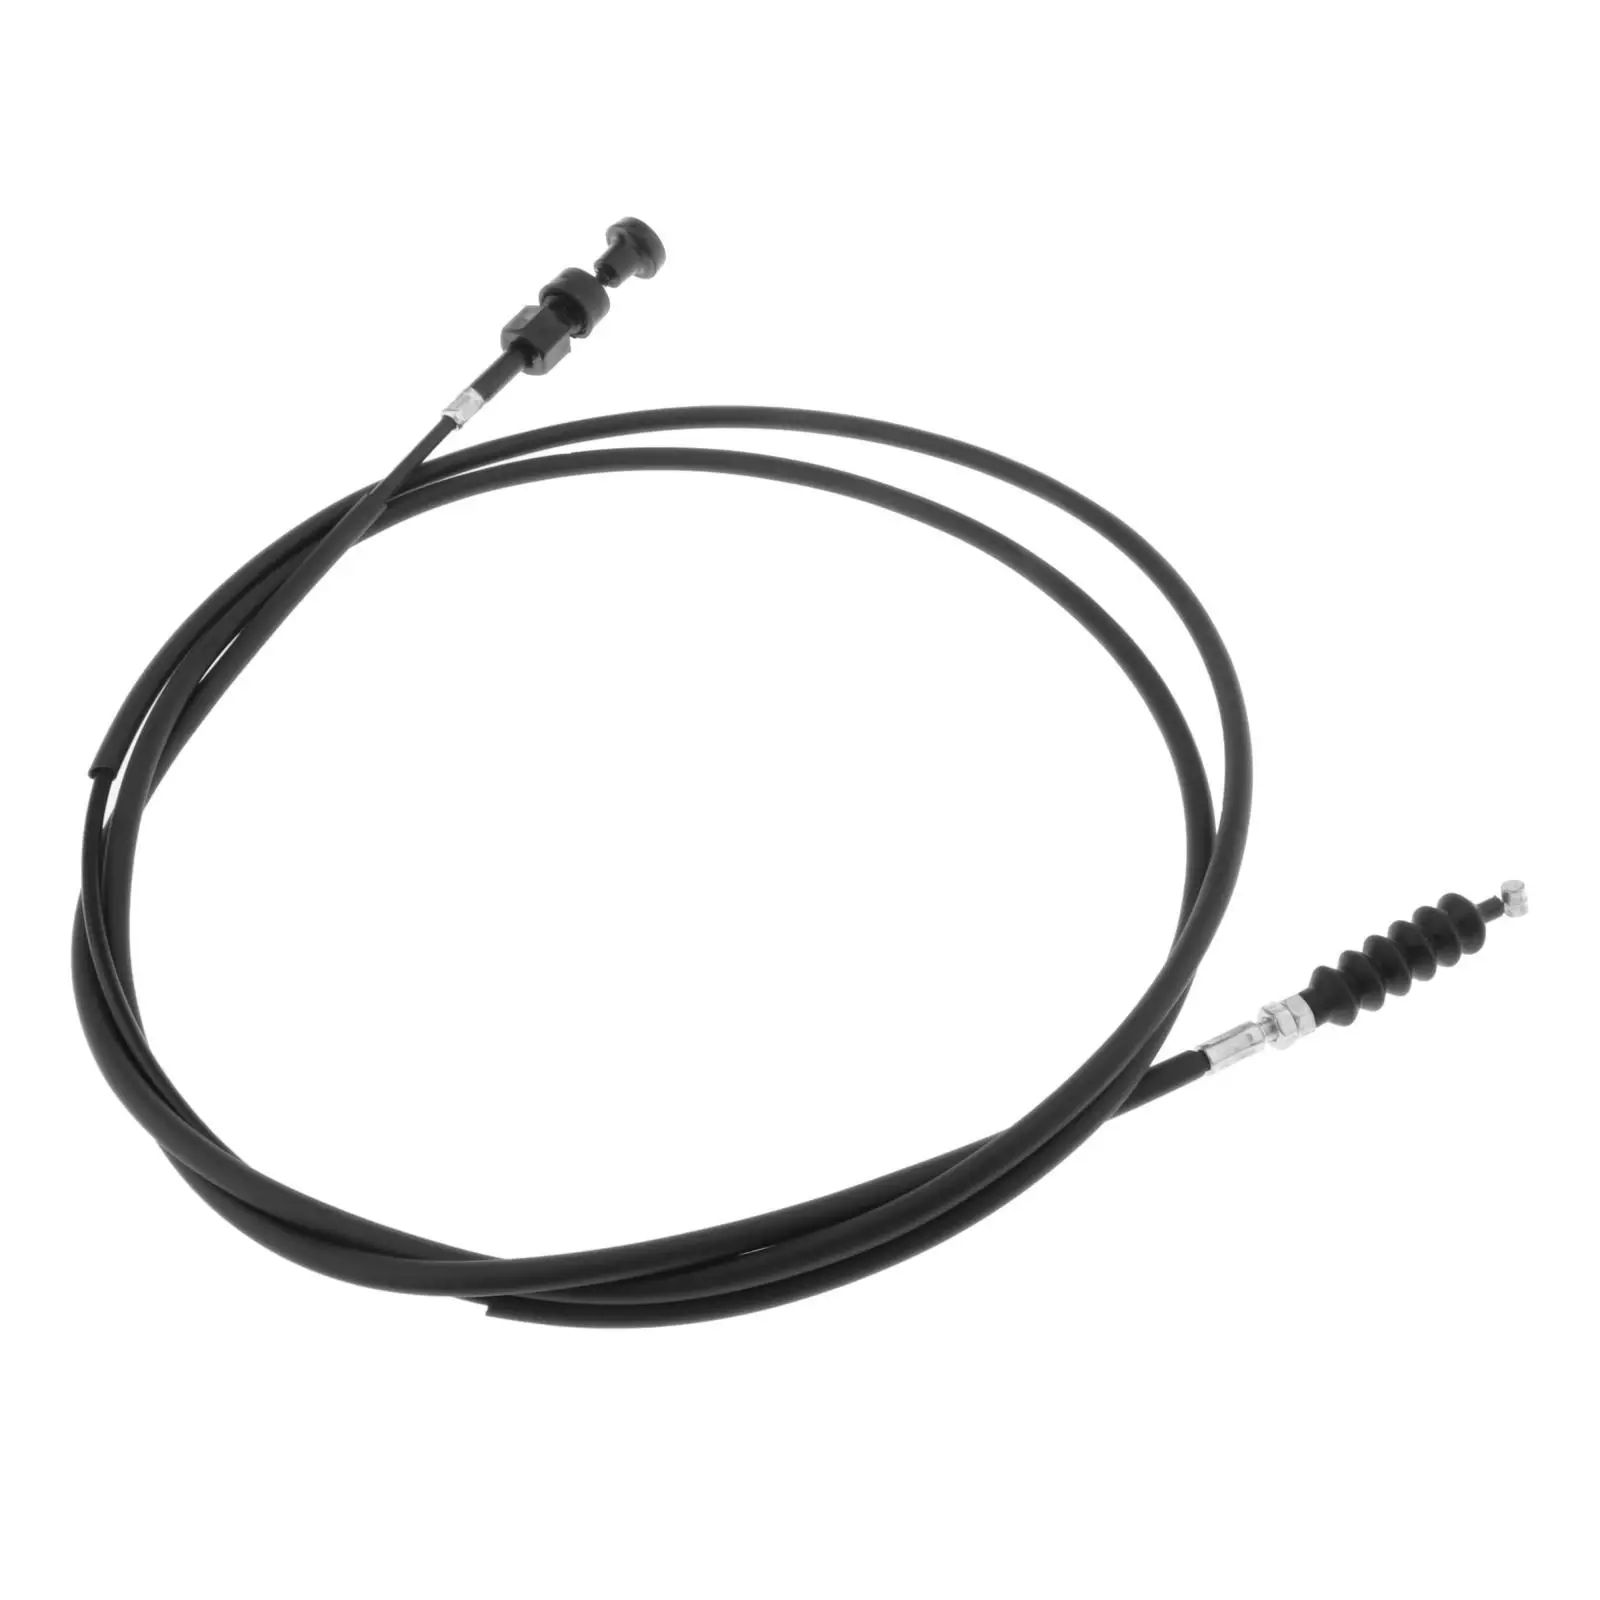 Choke 54017-1208 Starter Cable Fit for Kawasaki 3010 3020 Mule